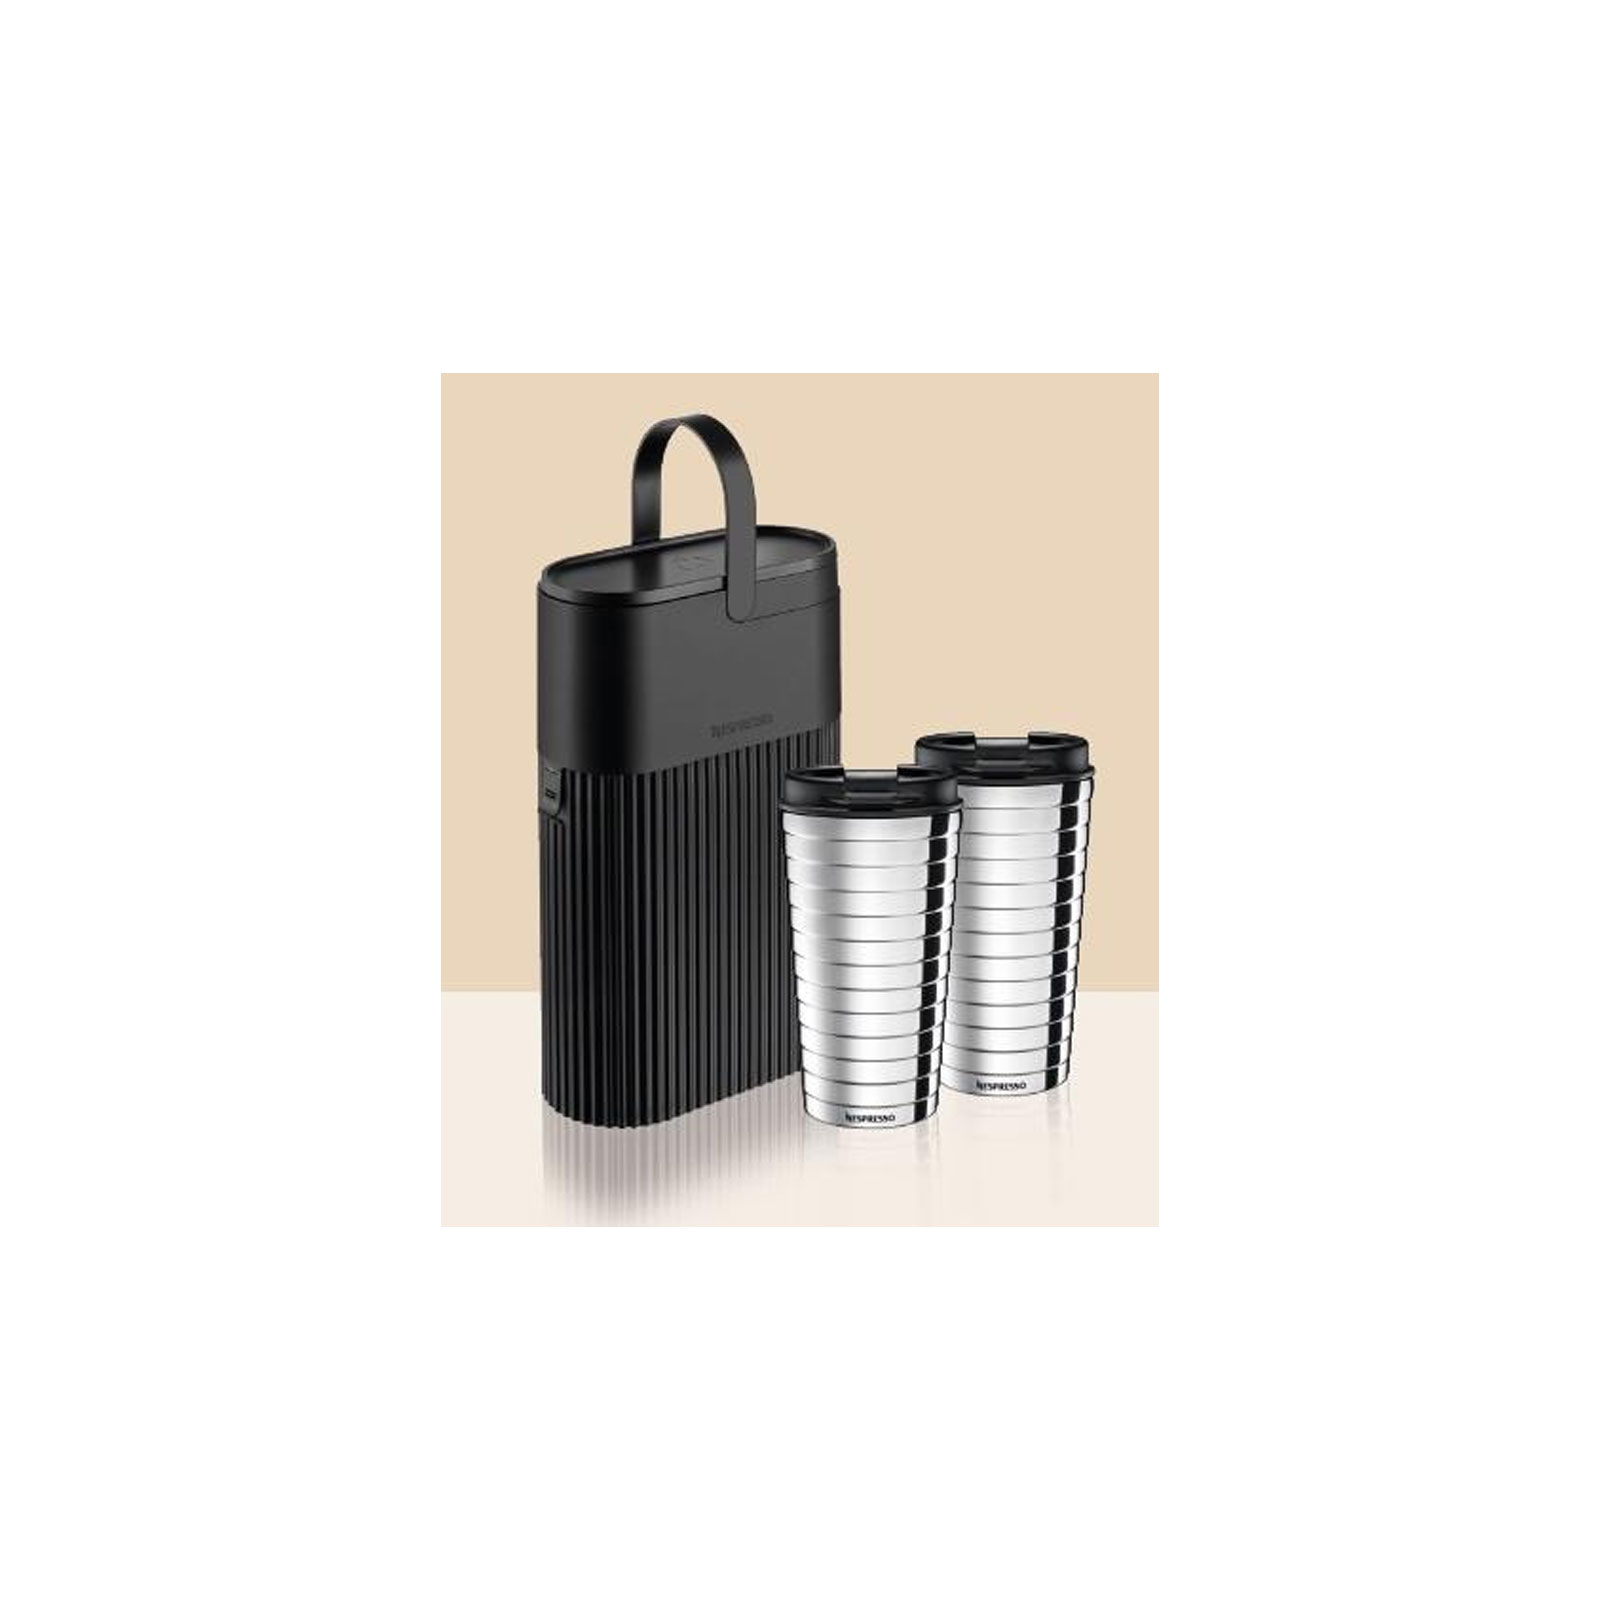 Nestlé Nespresso Geschenk-Set Recycling Behälter + Travel Mug